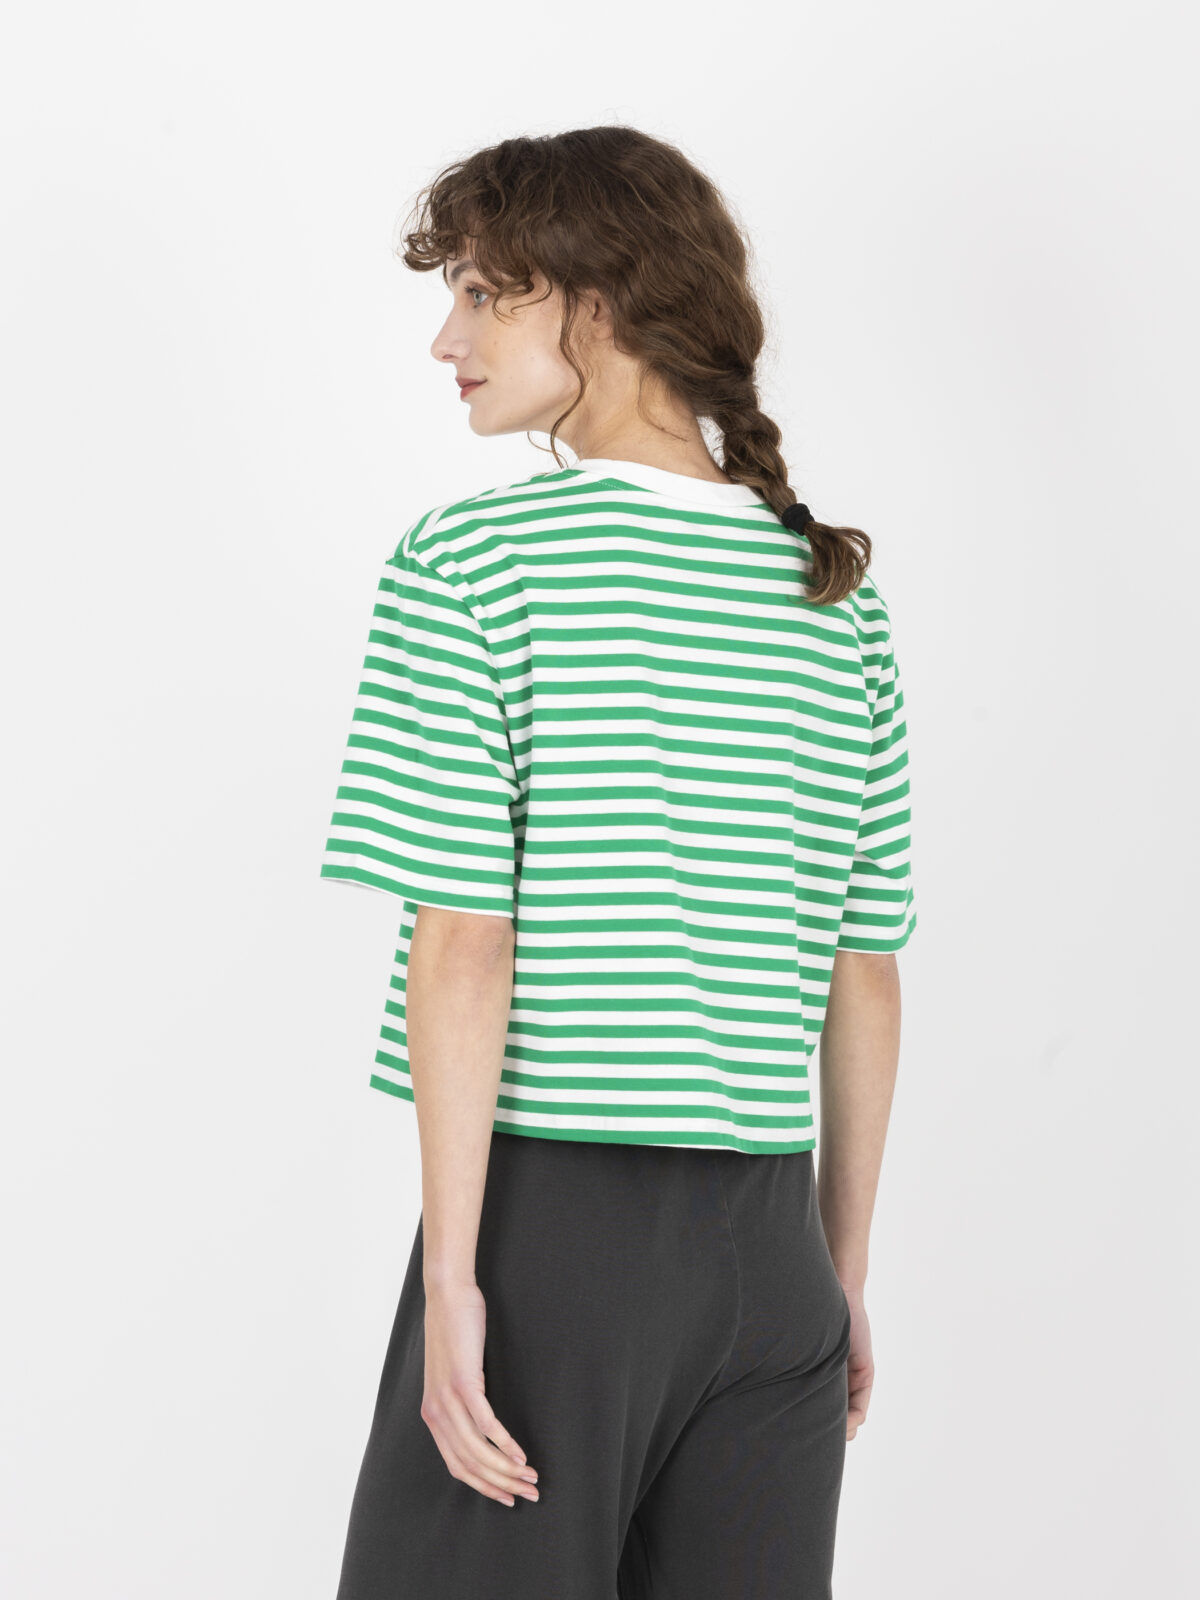 milano-tshirt-green-striped-cotton-suncoo-matchboxathens